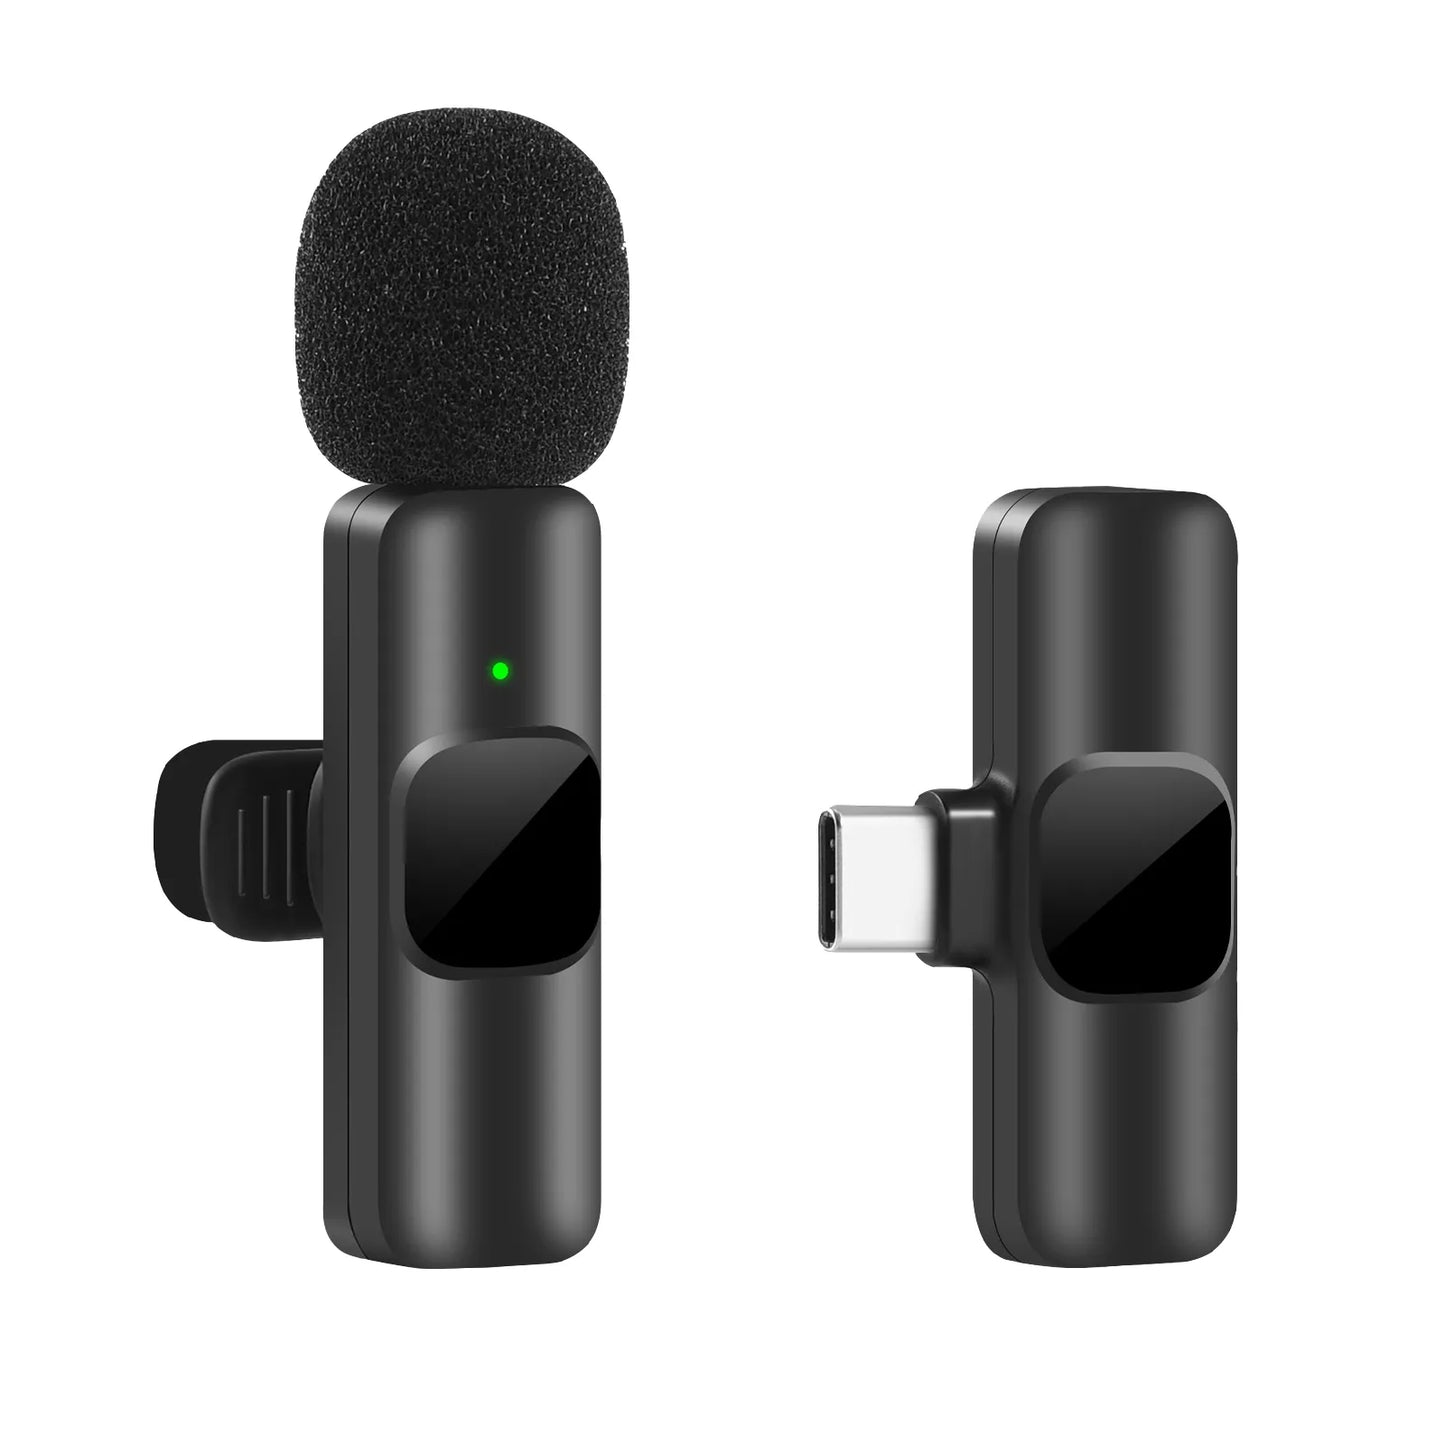 WaveLink Mini Wireless Microphone